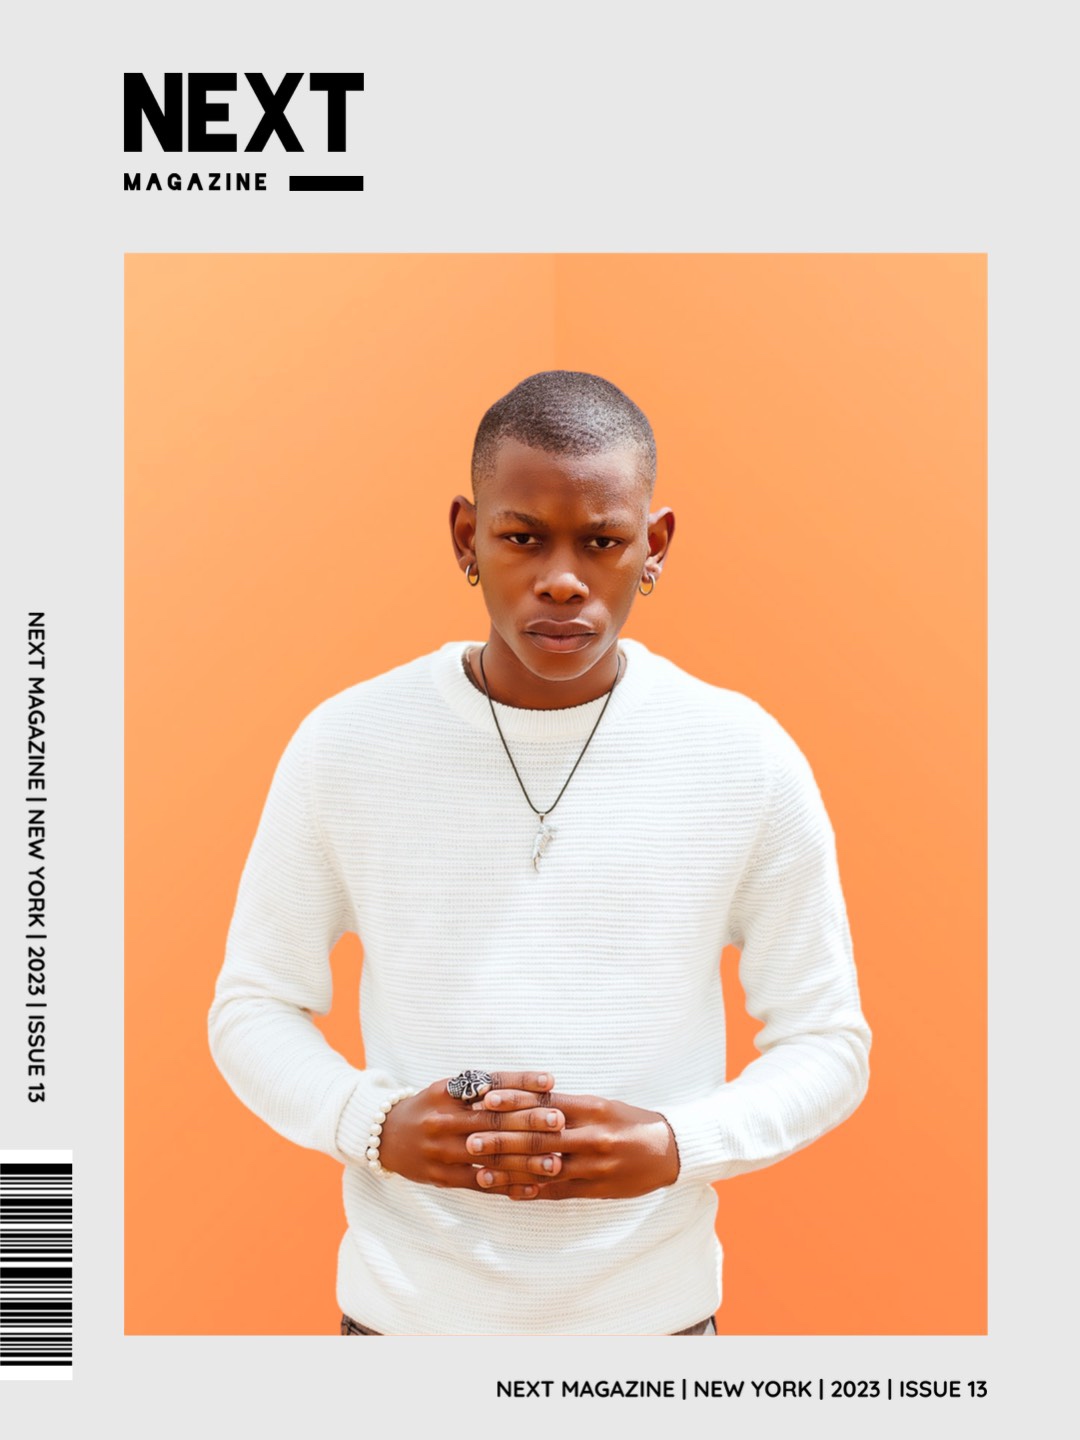 orange and gray minimalistic magazine cover